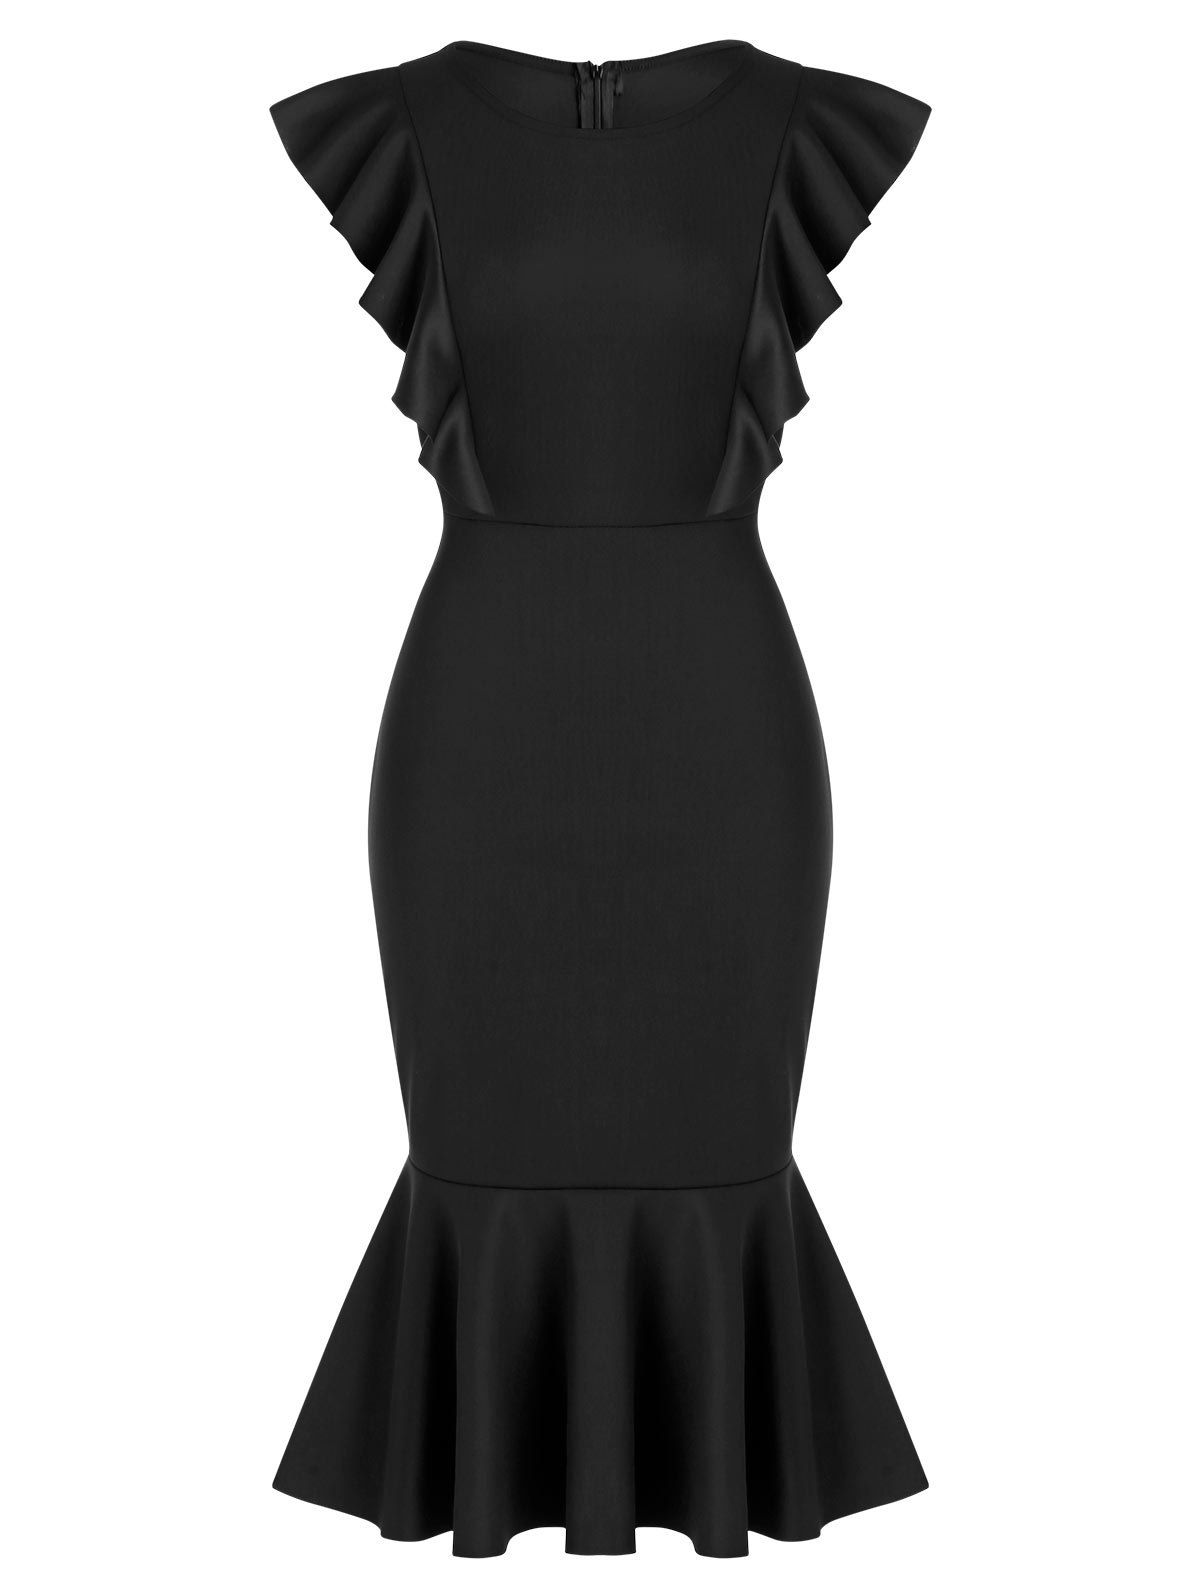 [30% OFF] 2020 Plus Size Mermaid Tail Bodycon Dress In BLACK | DressLily